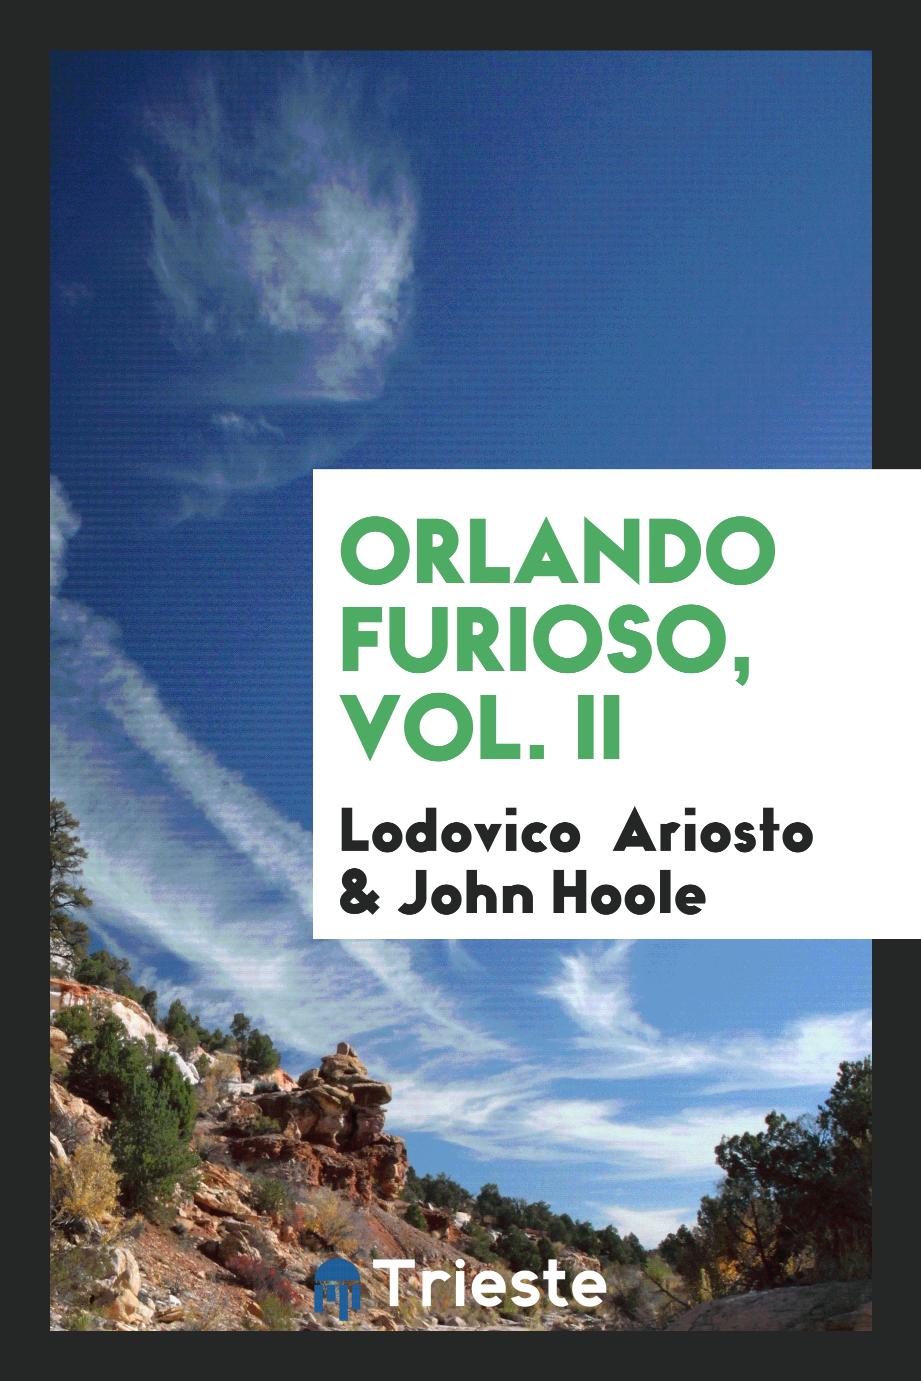 Orlando Furioso, Vol. II